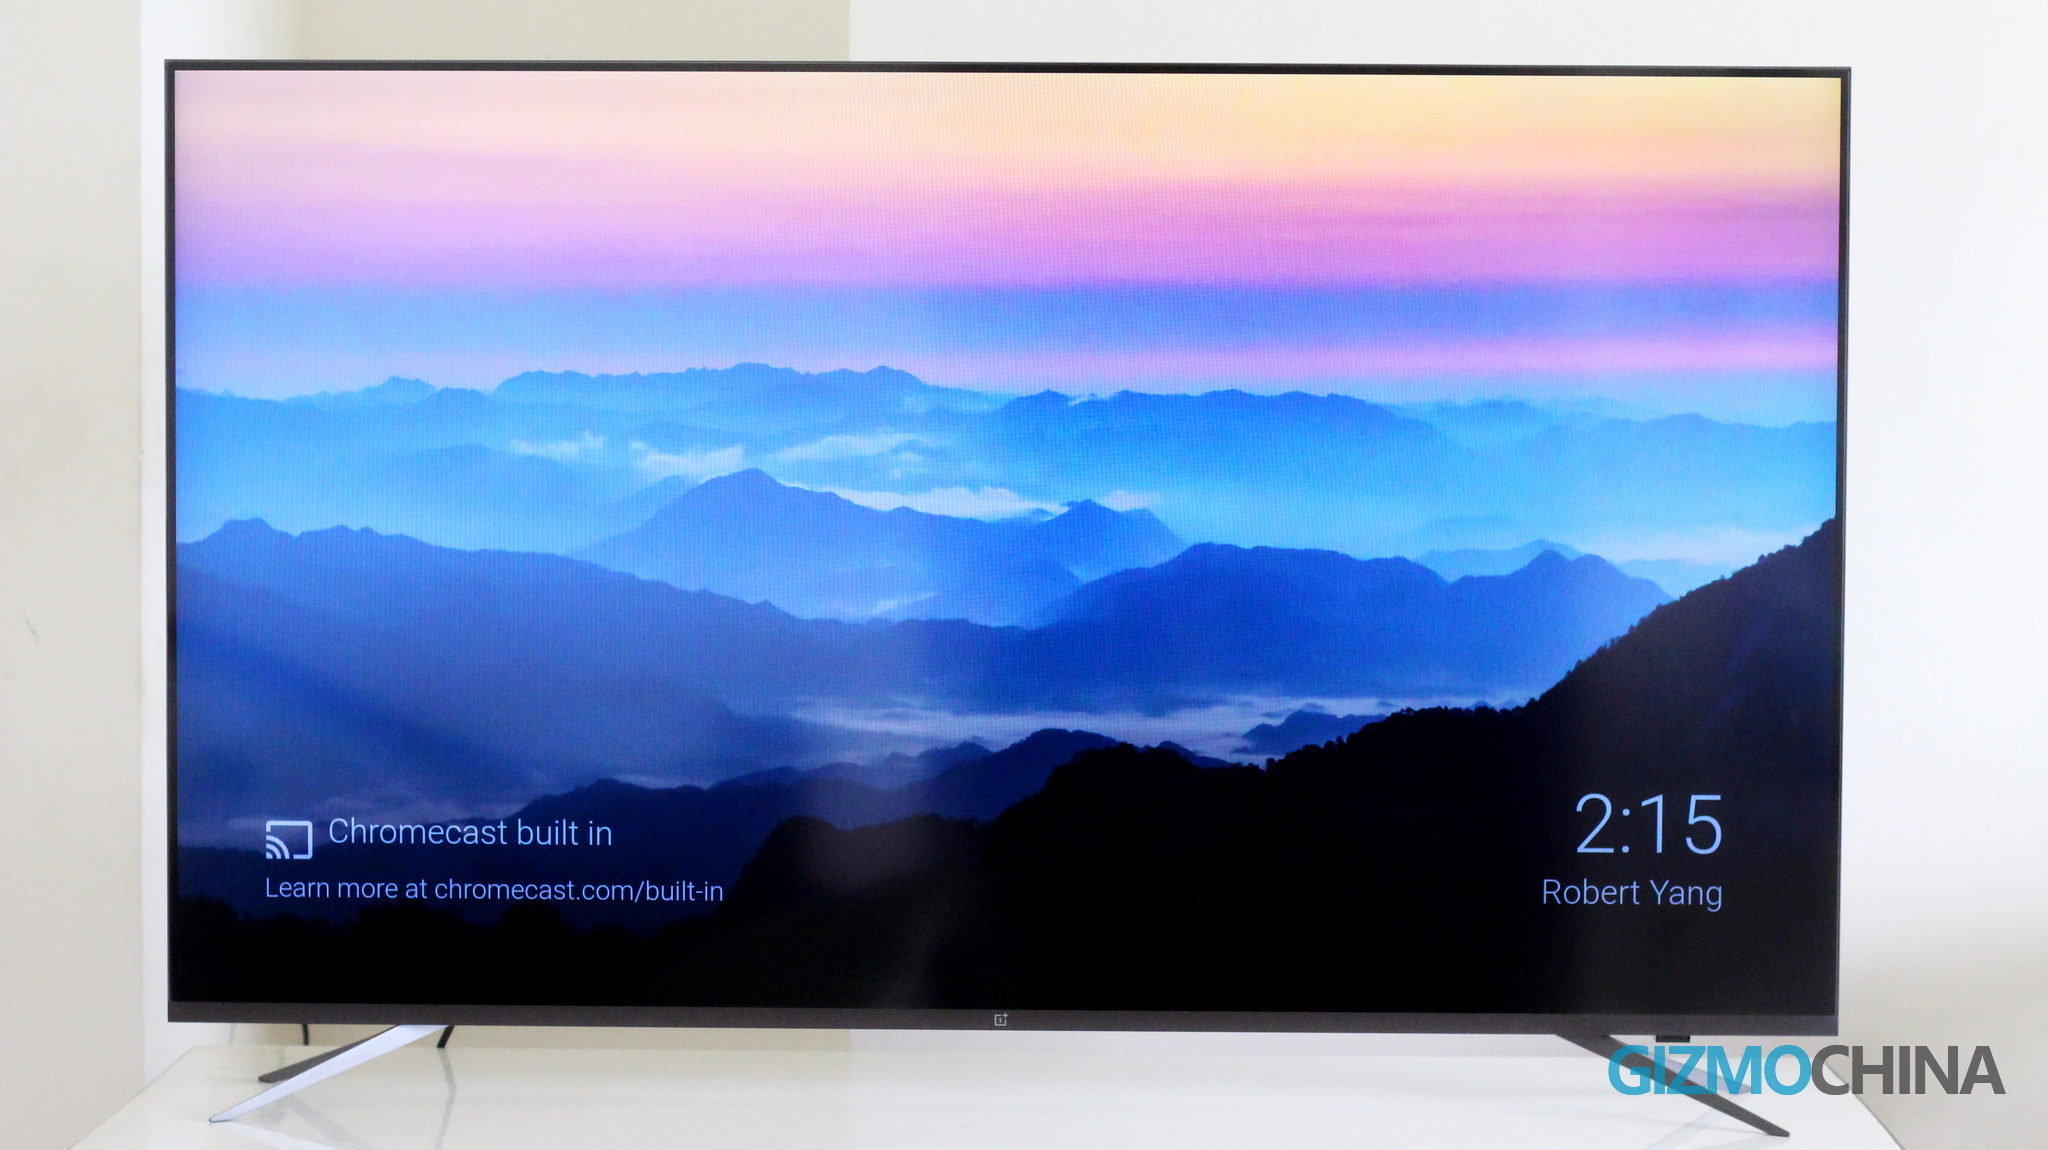 شكوى غامض السخرية  OnePlus TV U1 55-inch Review: Beautiful Design, Vibrant 4K Screen makes it  an Excellent Buy under ₹50,000 - Gizmochina